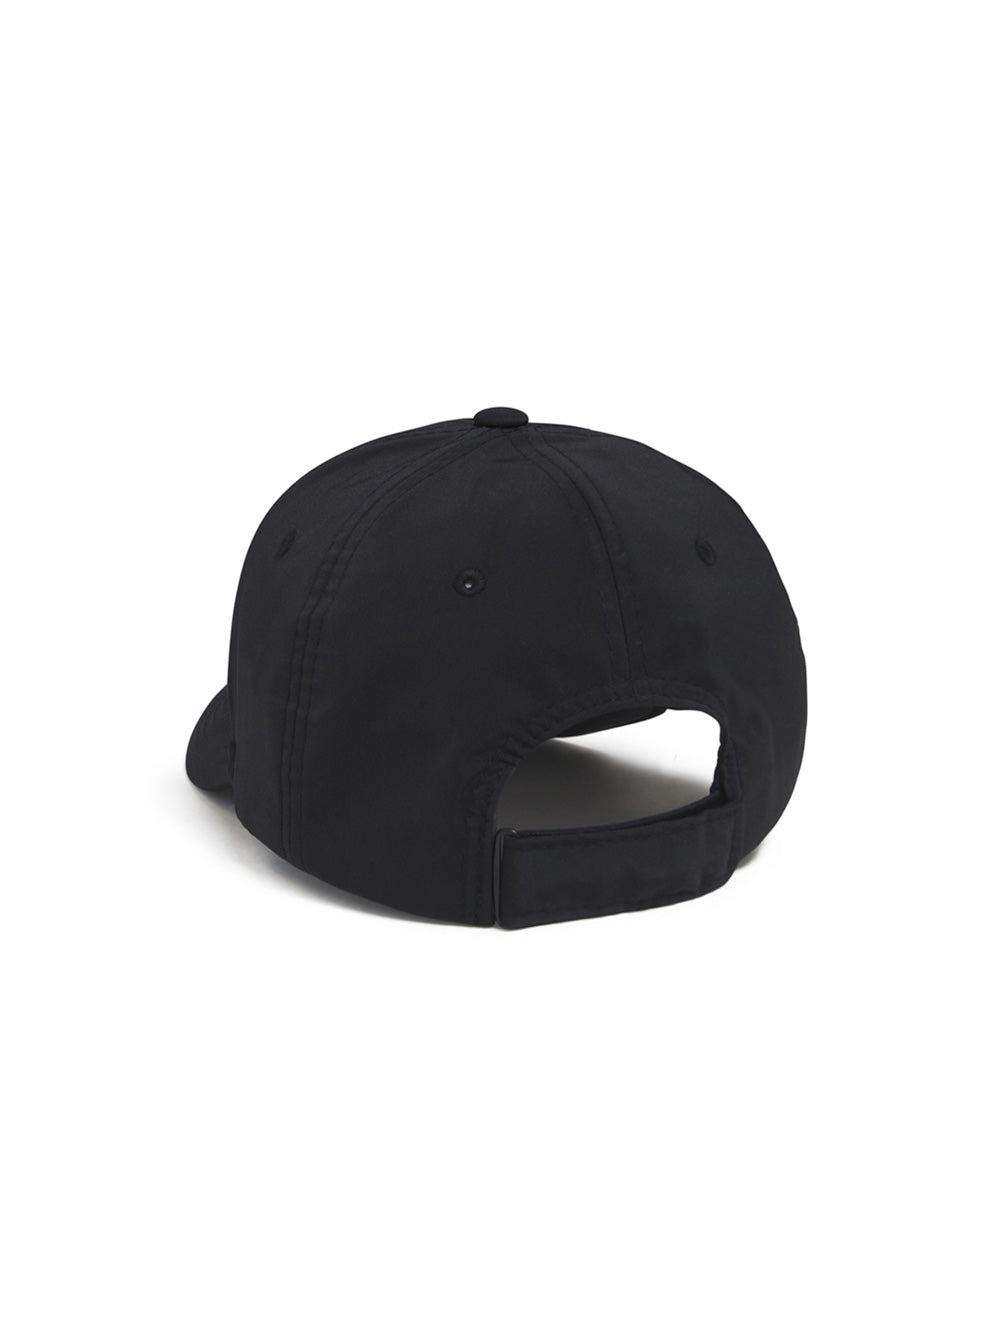 Hat | Black Anniversary - $15.00 | The CUTS Marketplace